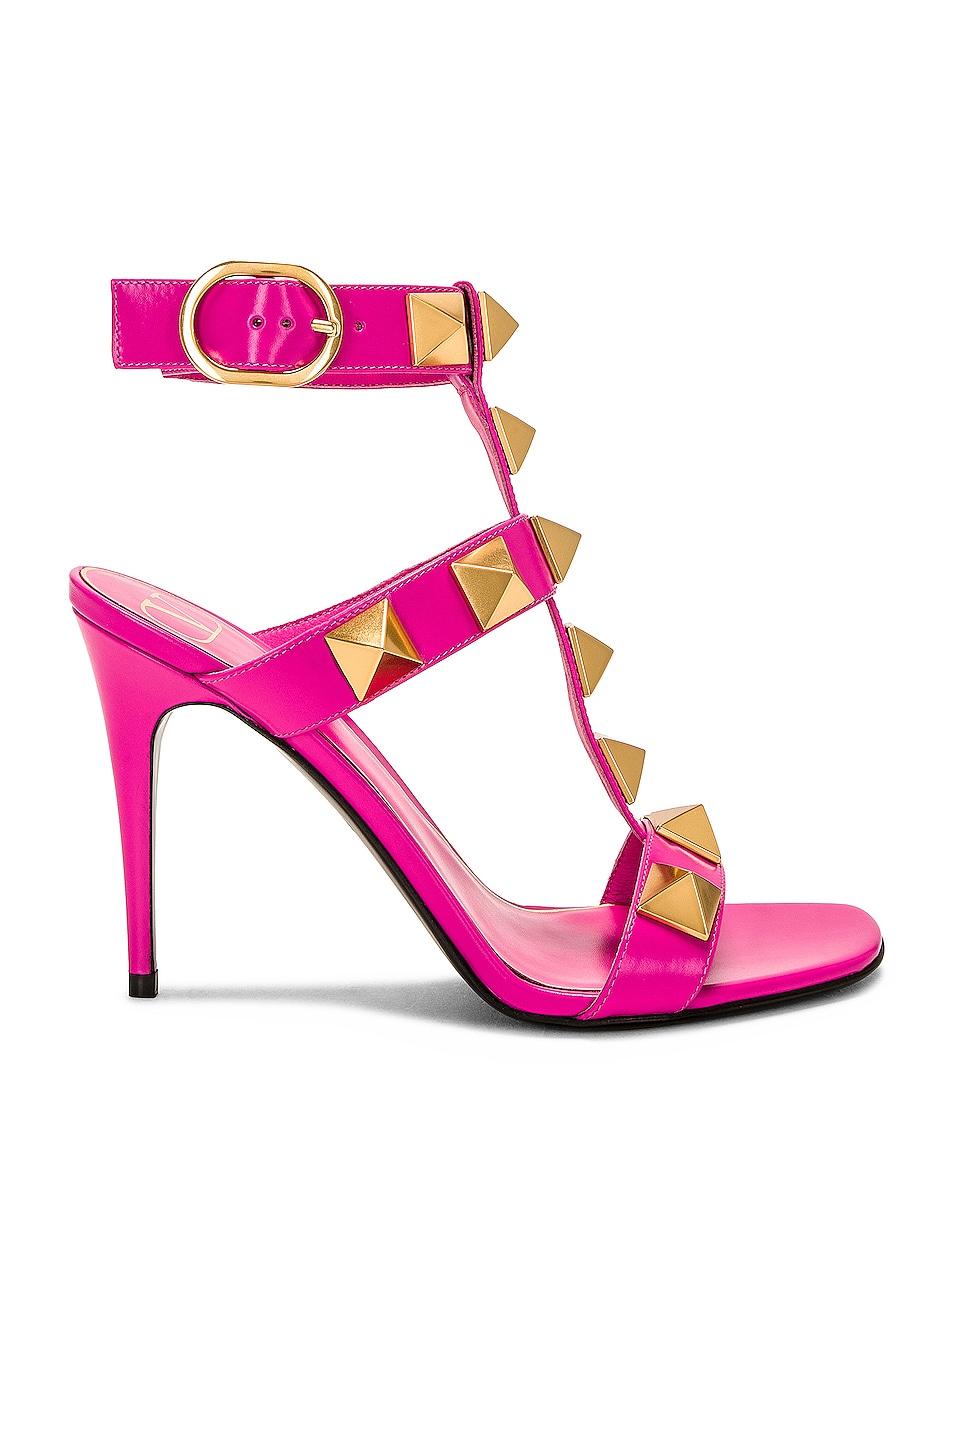 Valentino Garavani Roman Stud Sandal in Pink | FWRD